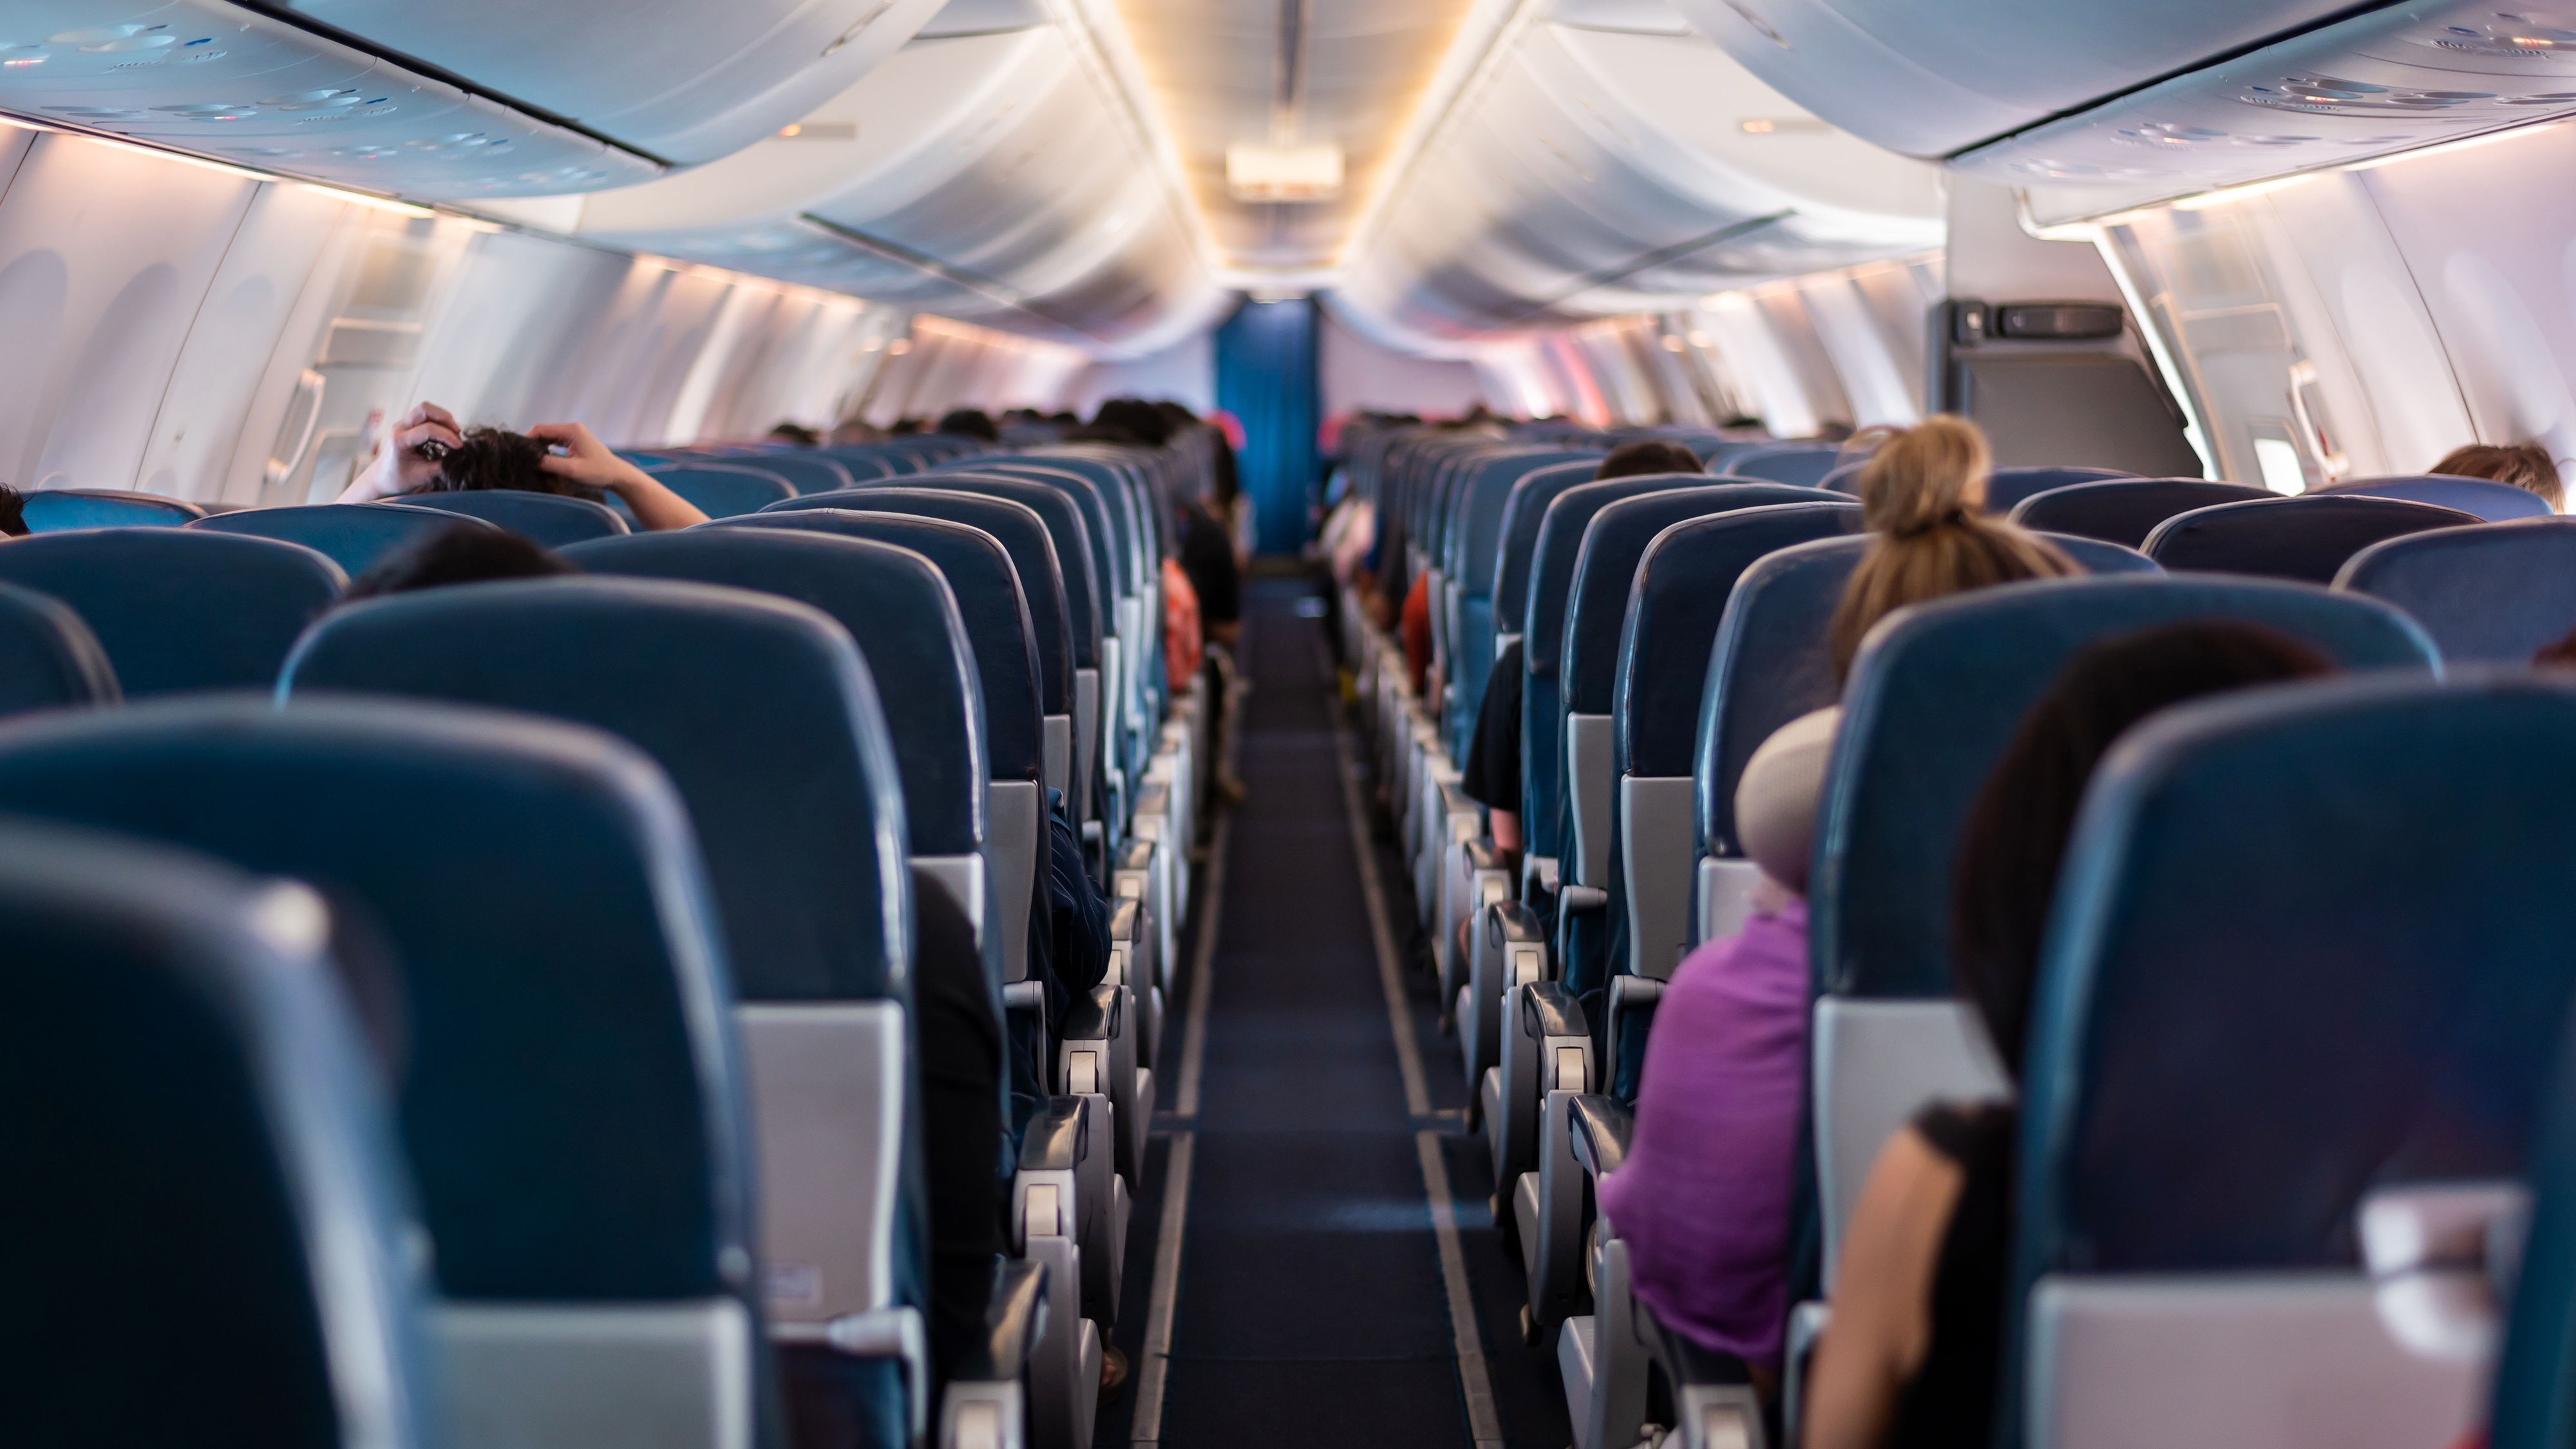 Airplane seats | Source: Shutterstock